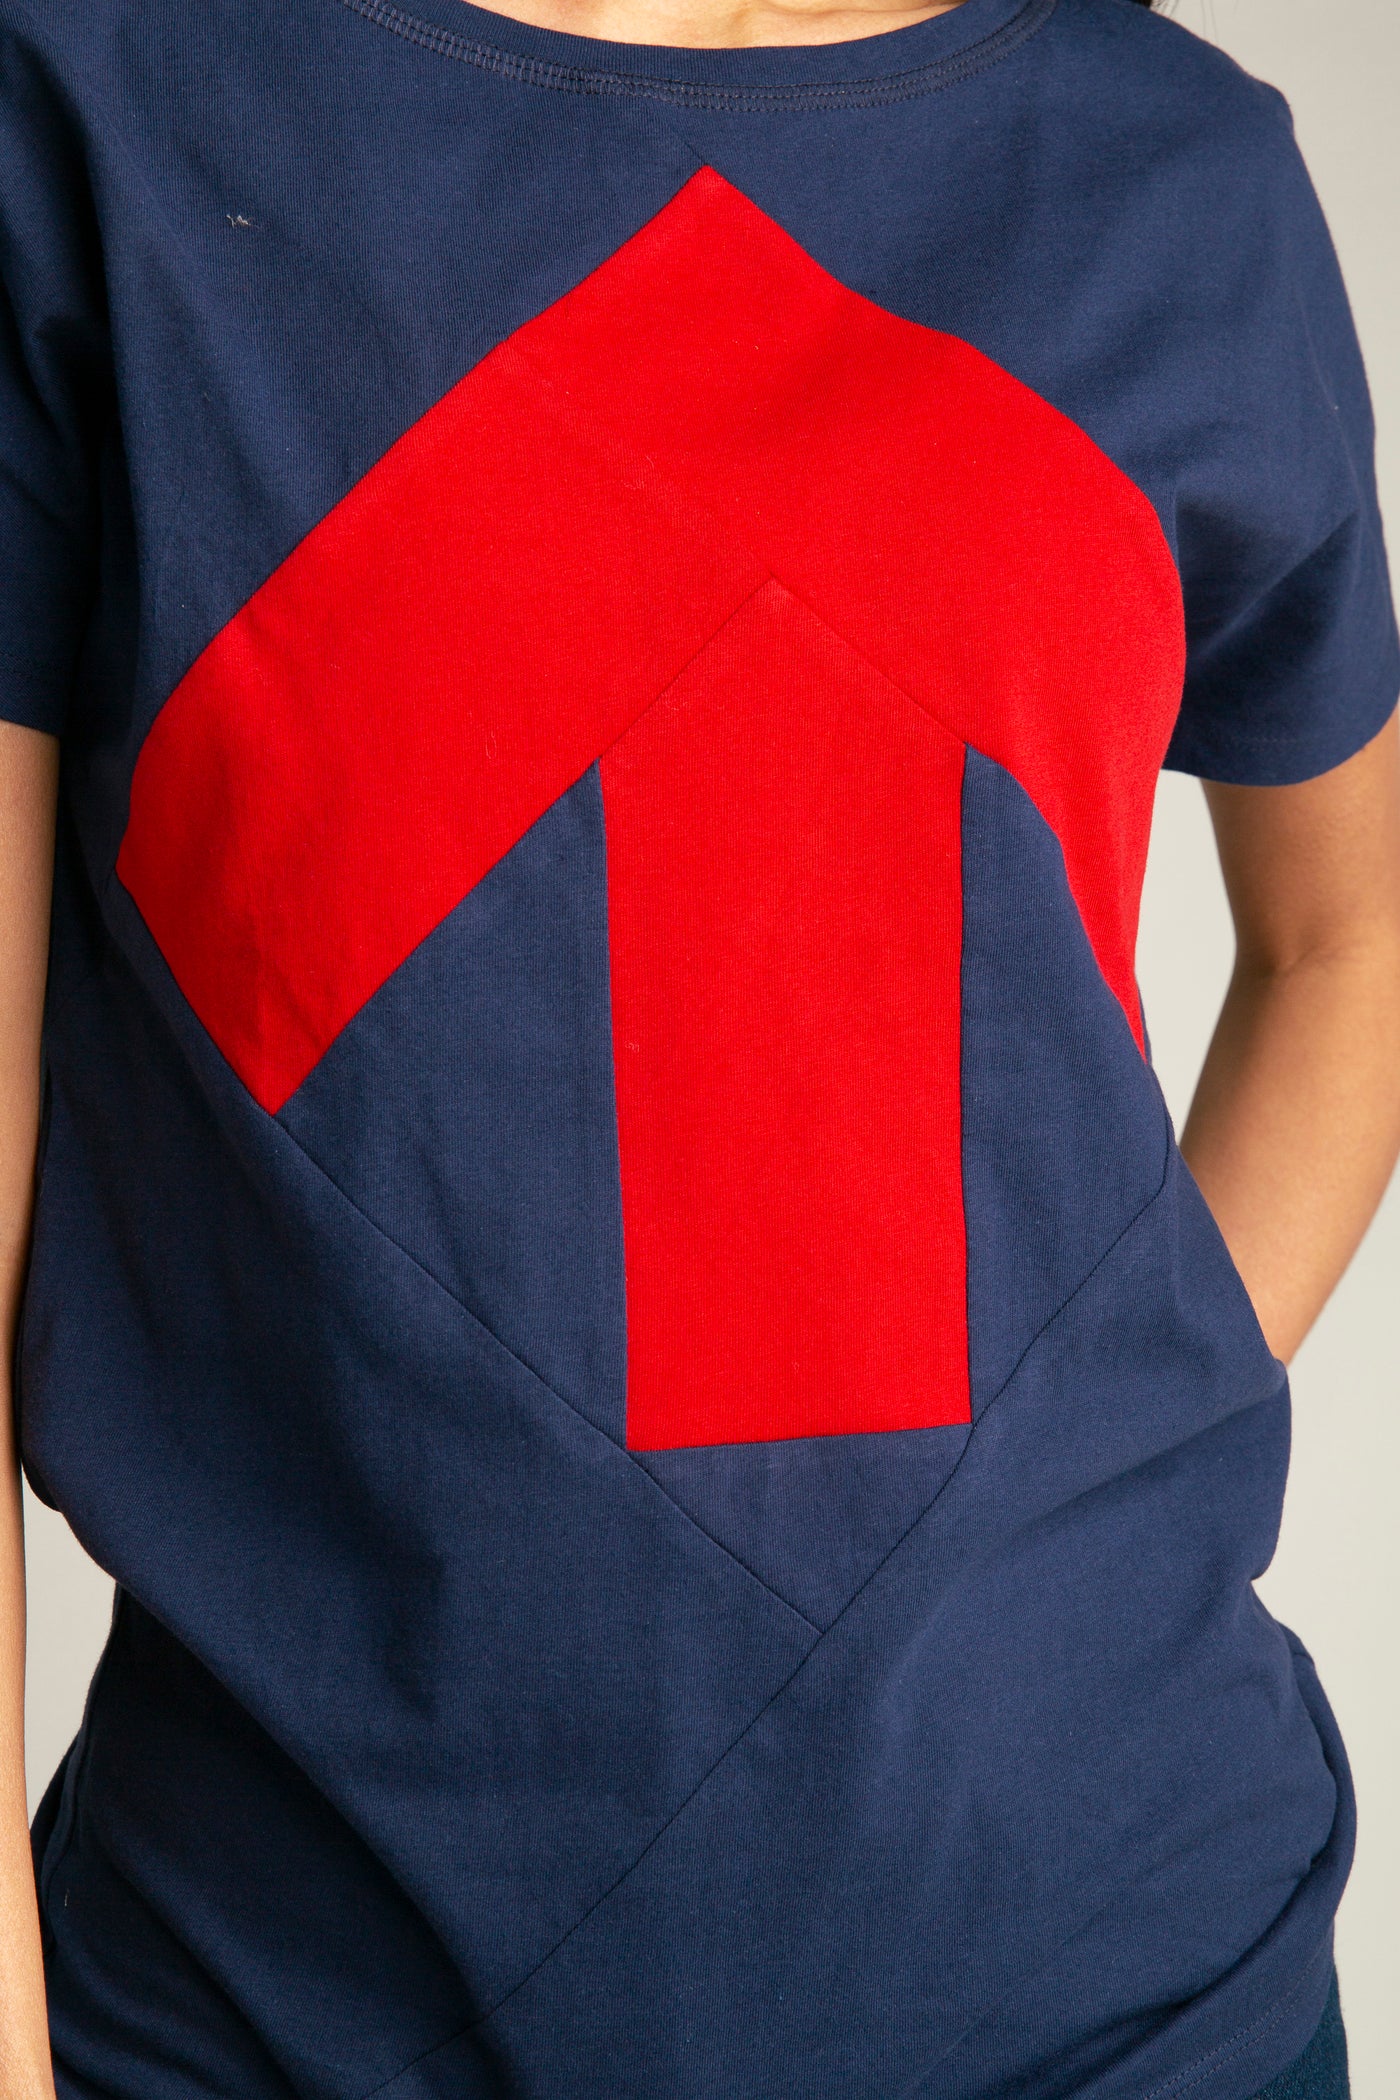 Up-Shirt für Damen | Dunkelblau, rot